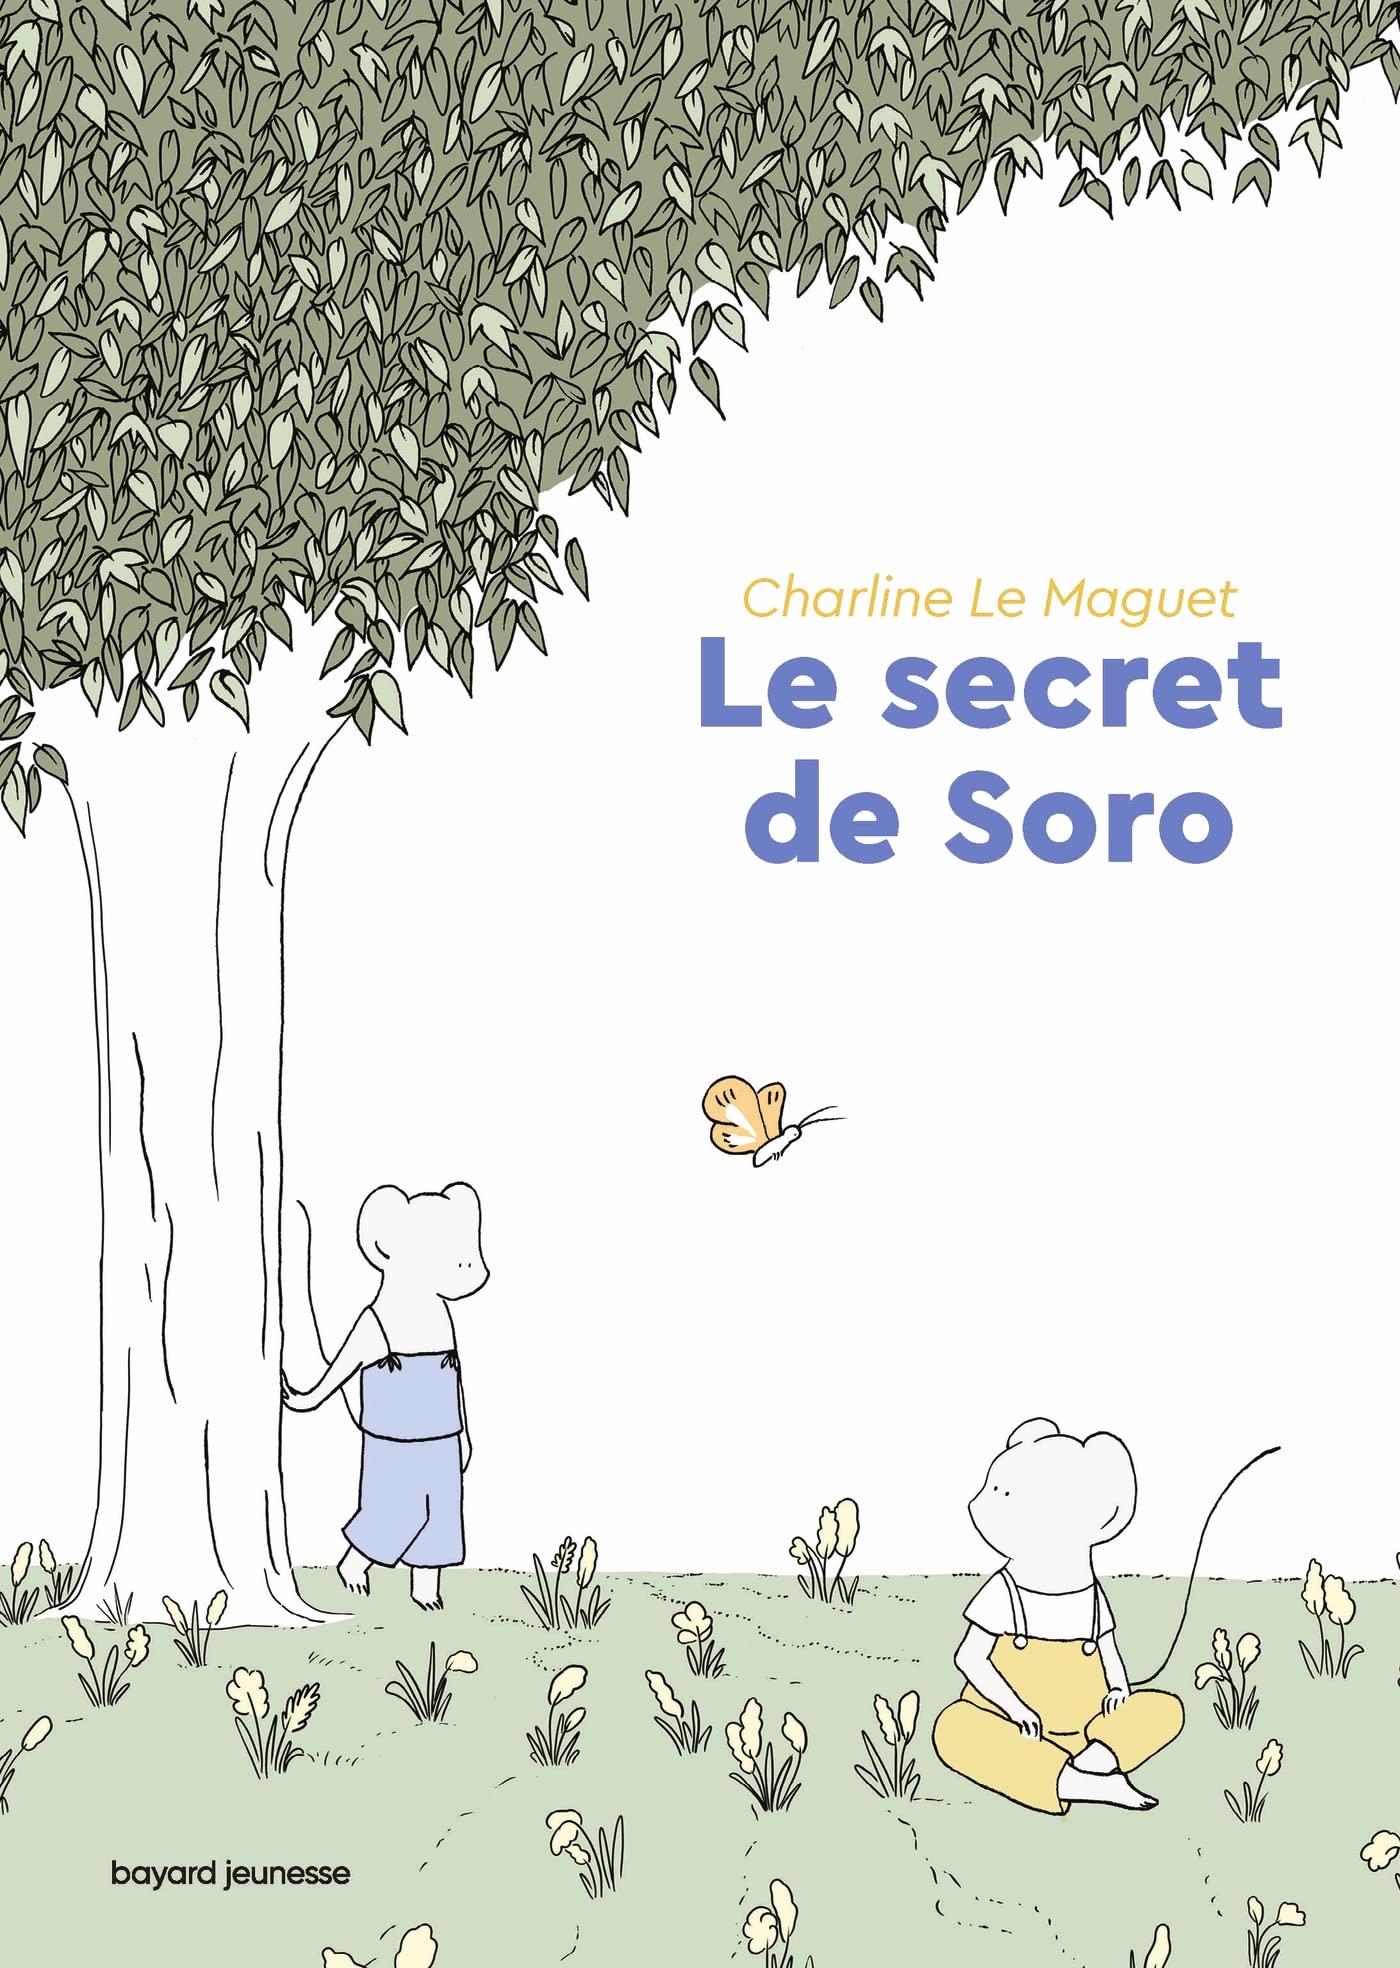 Le secret de Soro